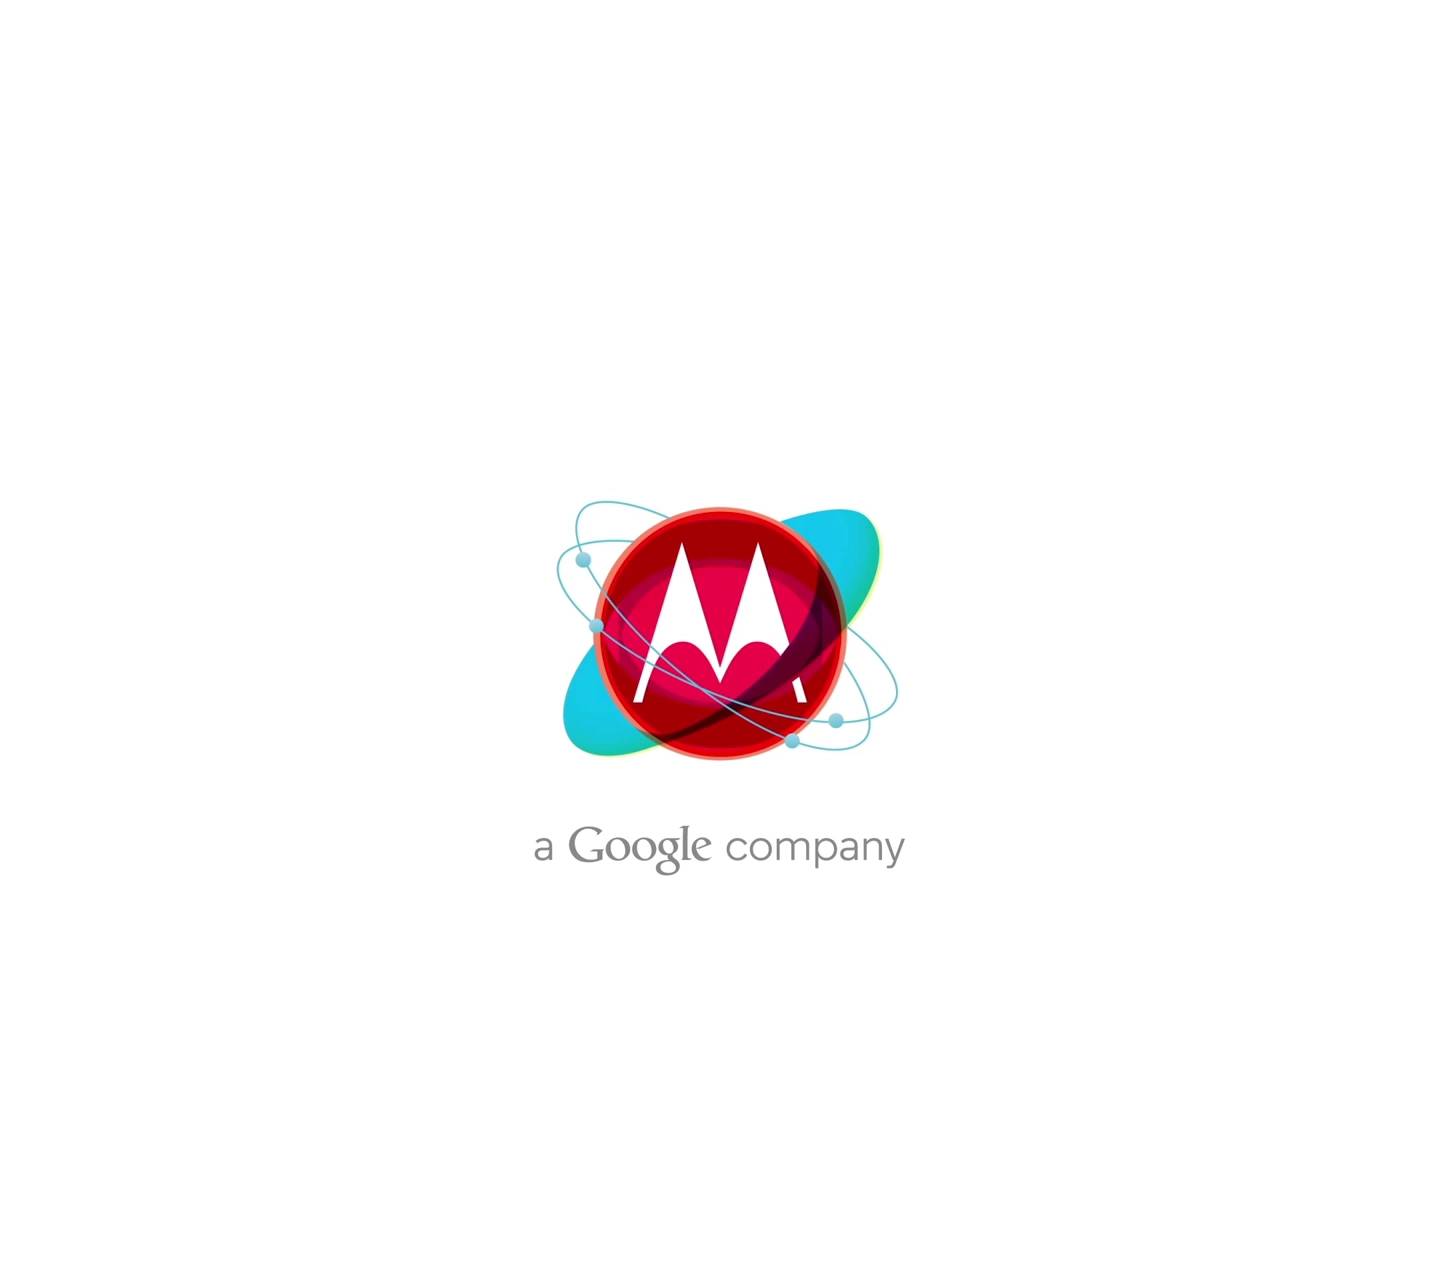 Download free motorola logo wallpaper for your mobile phone